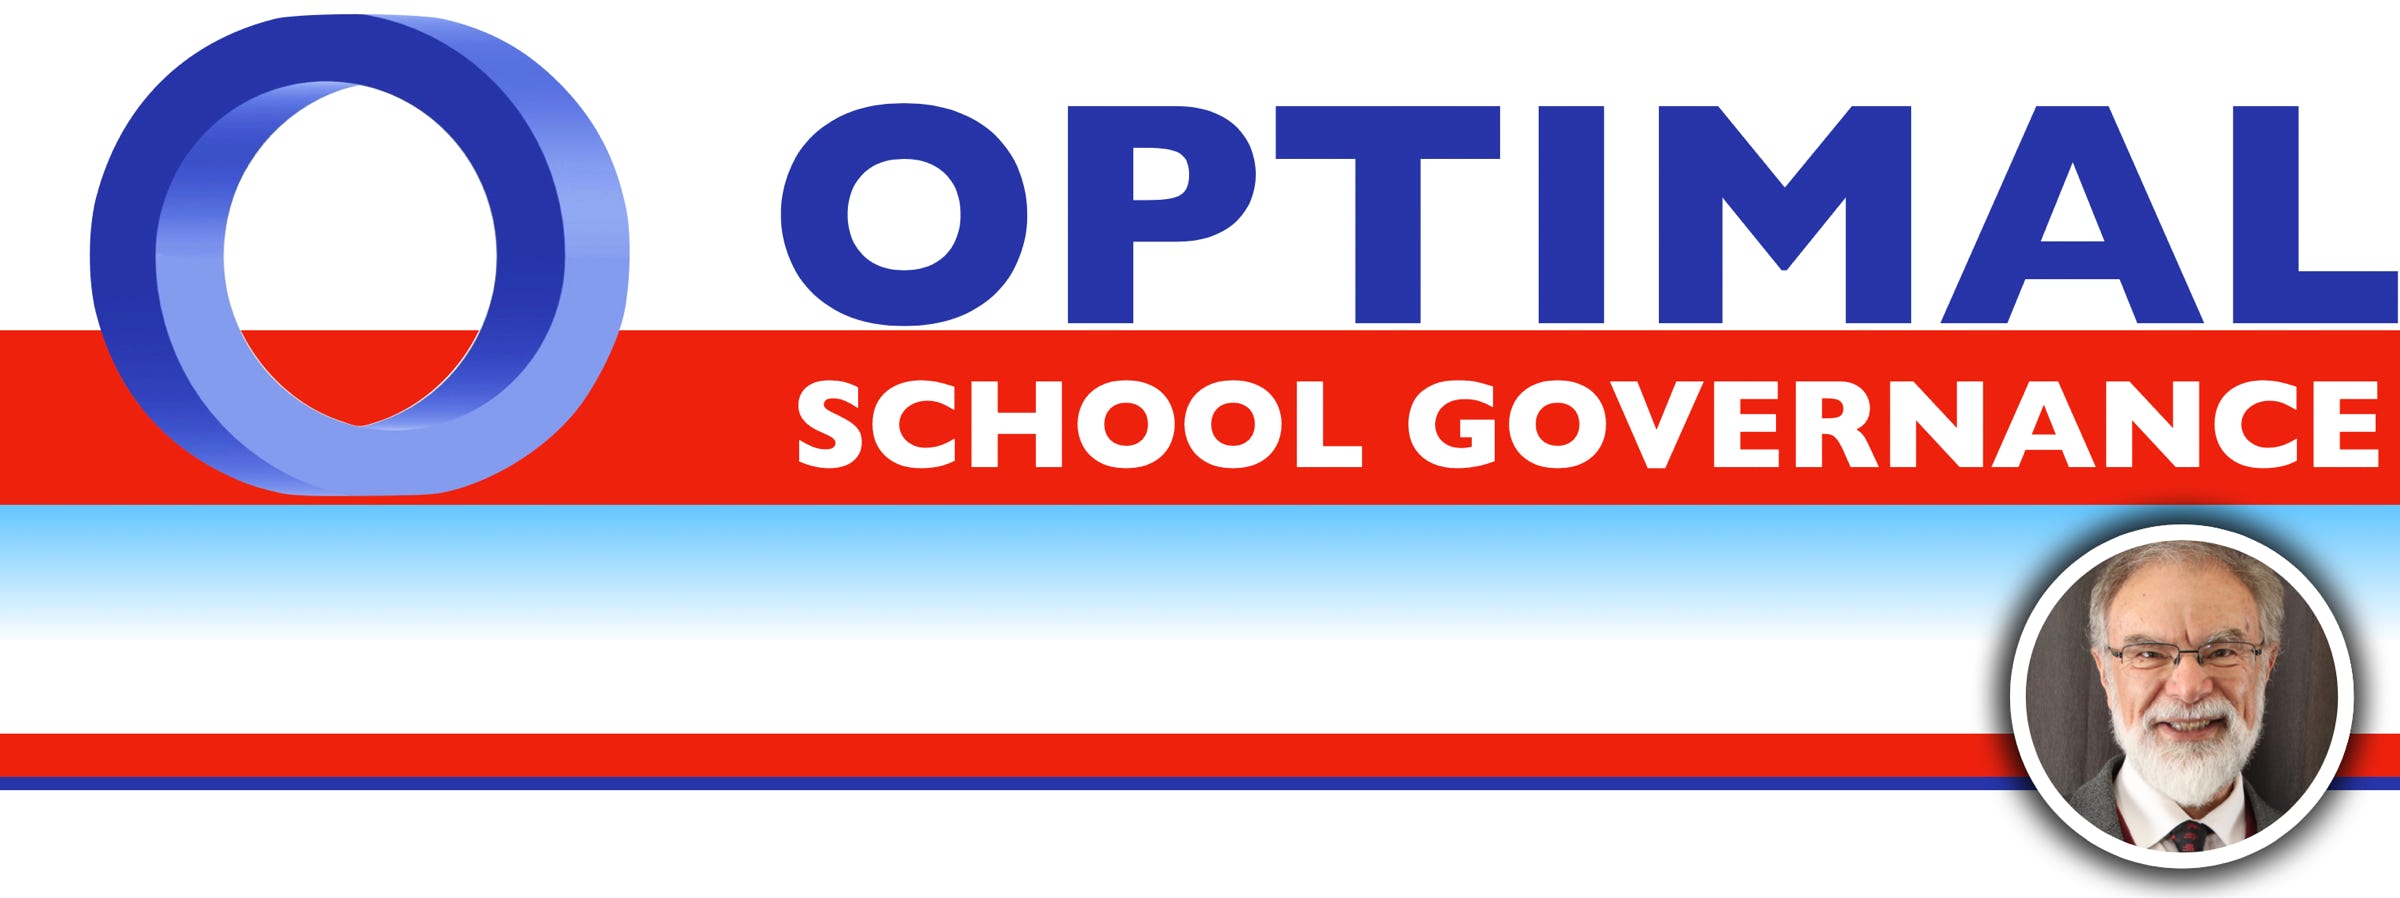 Optimal School Governance Stephen Codrington header